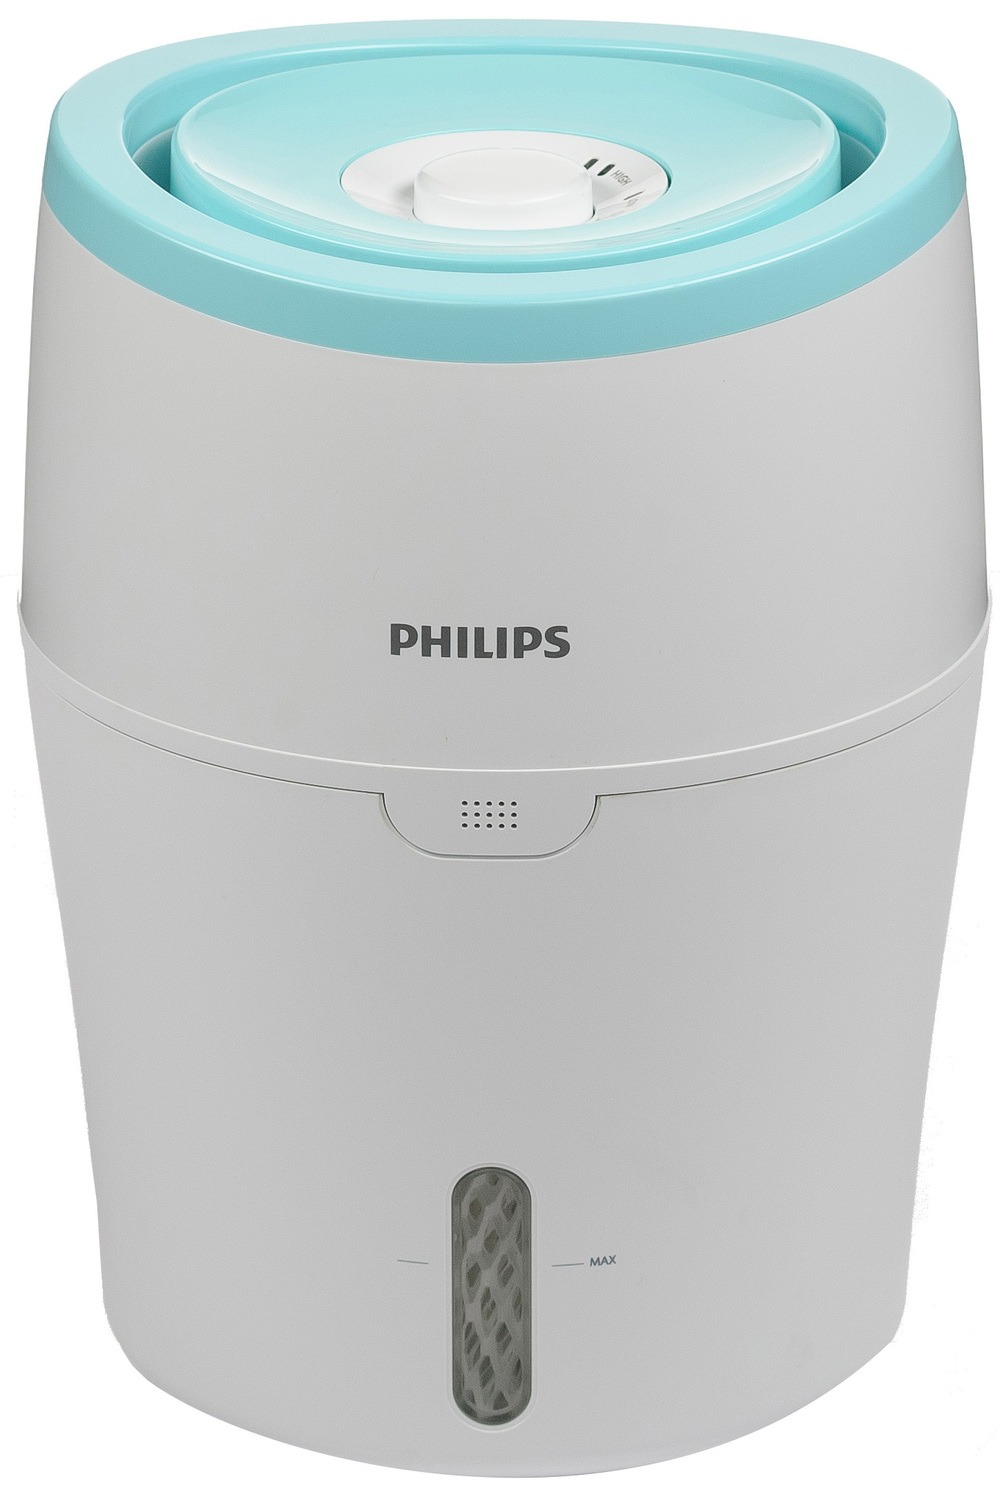 Philips hu4802 01. Увлажнитель воздуха Philips hu4801. Увлажнитель воздуха Philips hu4801/01. Увлажнитель Philips hu4802. Филипс воздухоочиститель и увлажнитель.